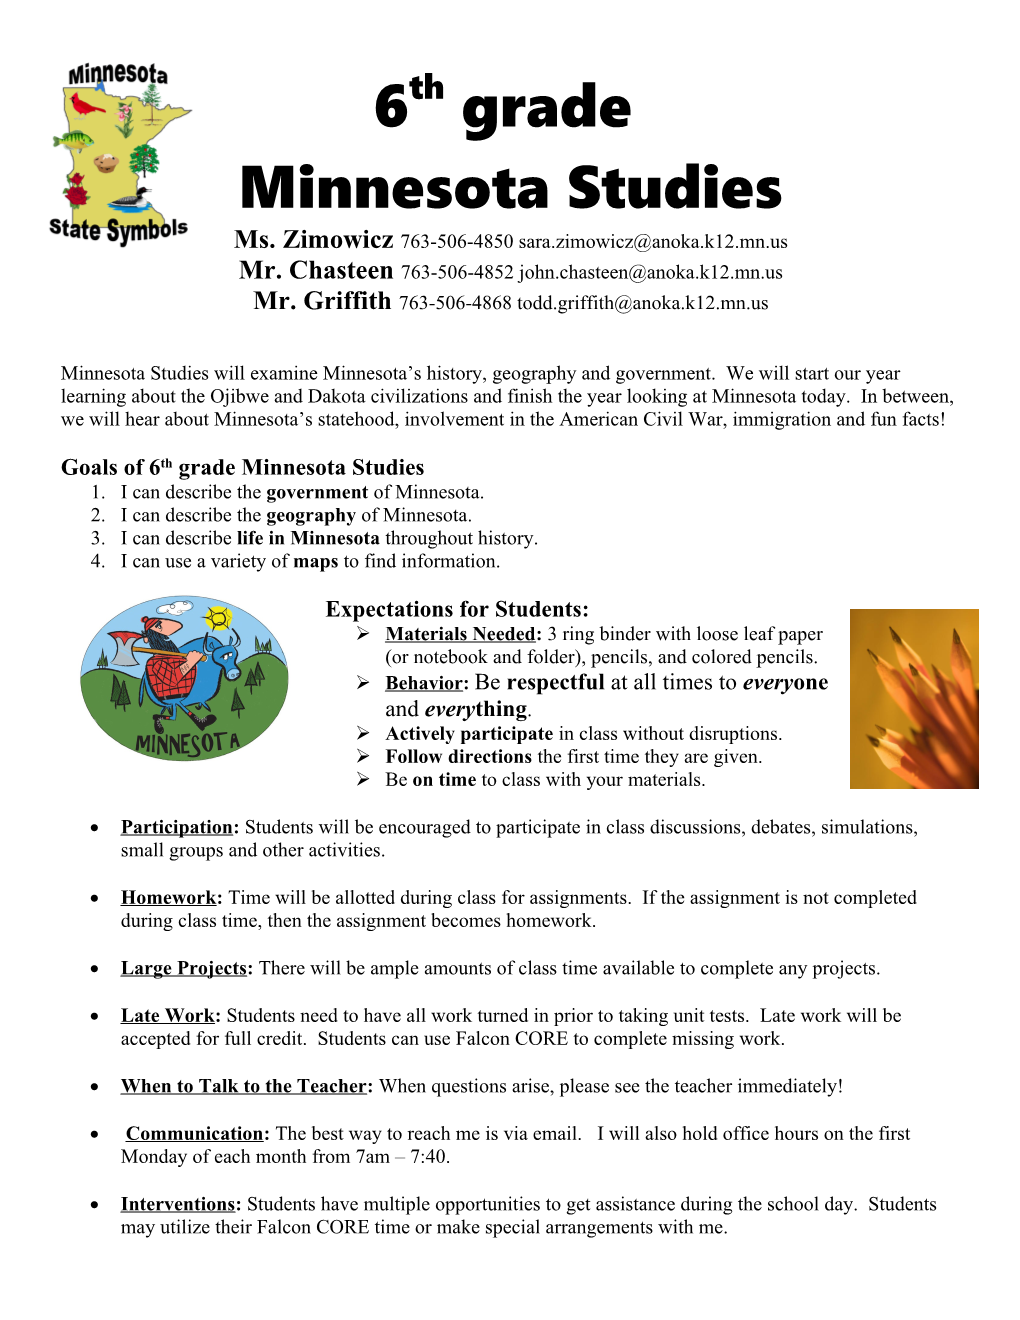 Goals of 6Th Grade Minnesota Studies